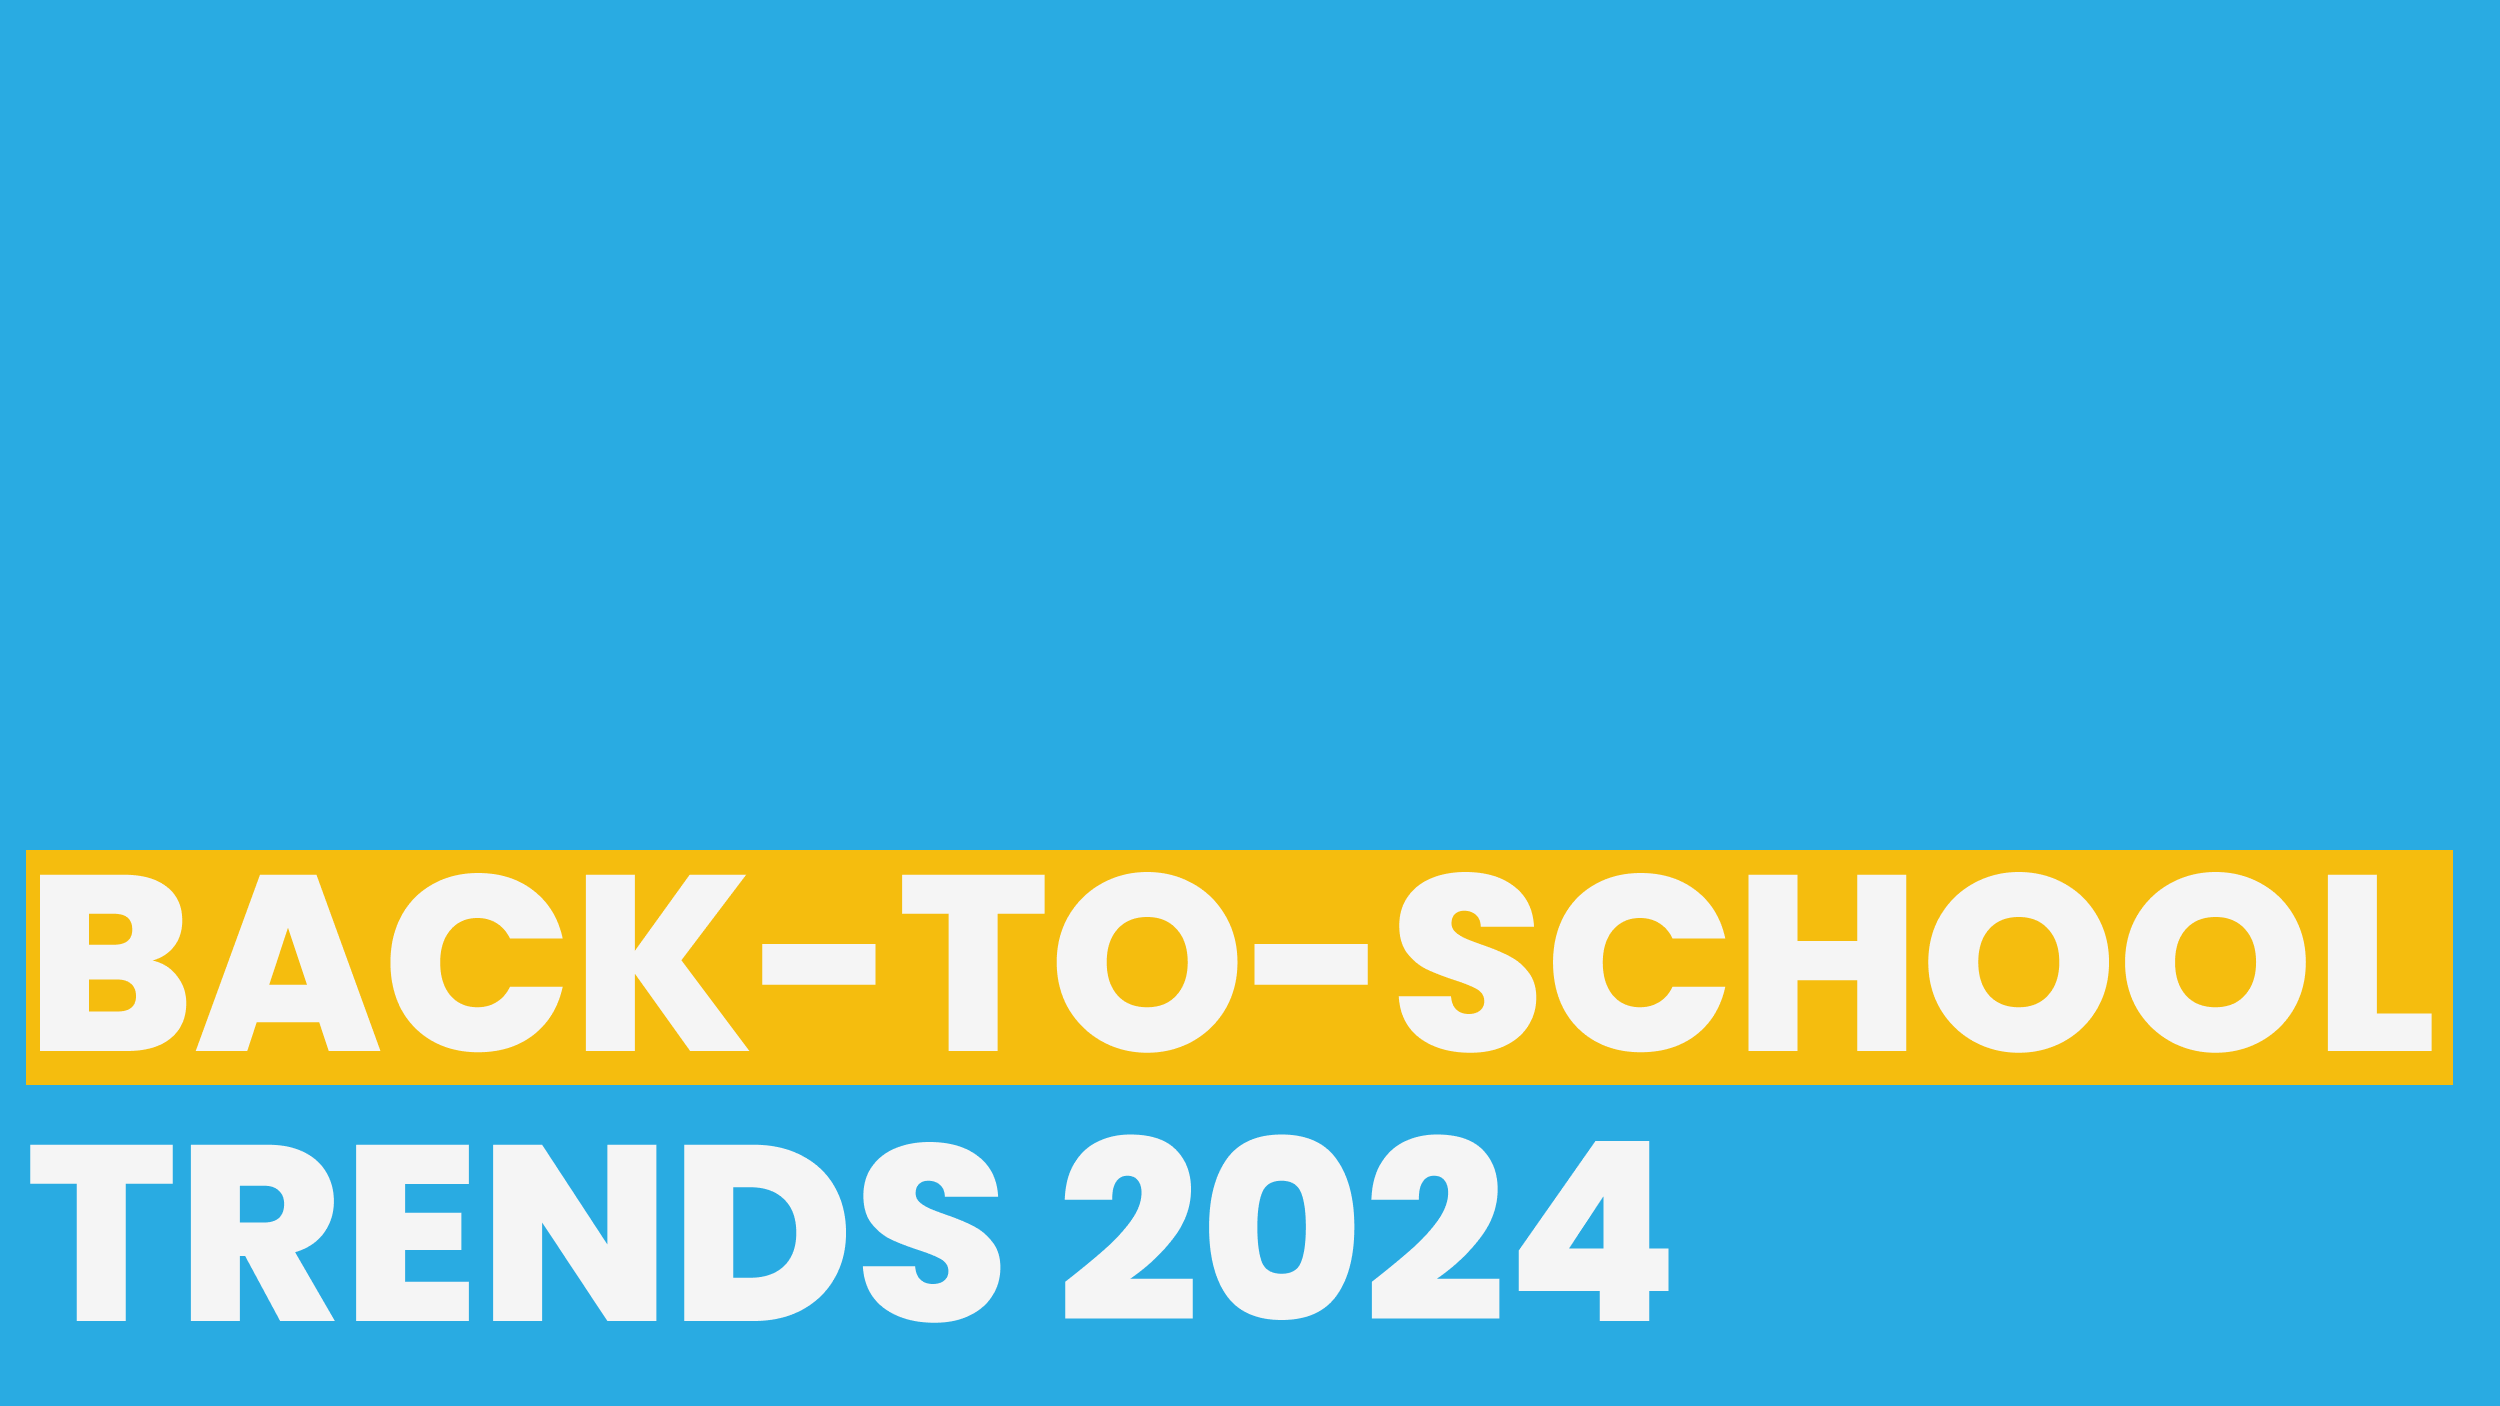 BACK-TO-SCHOOL TRENDS 2024